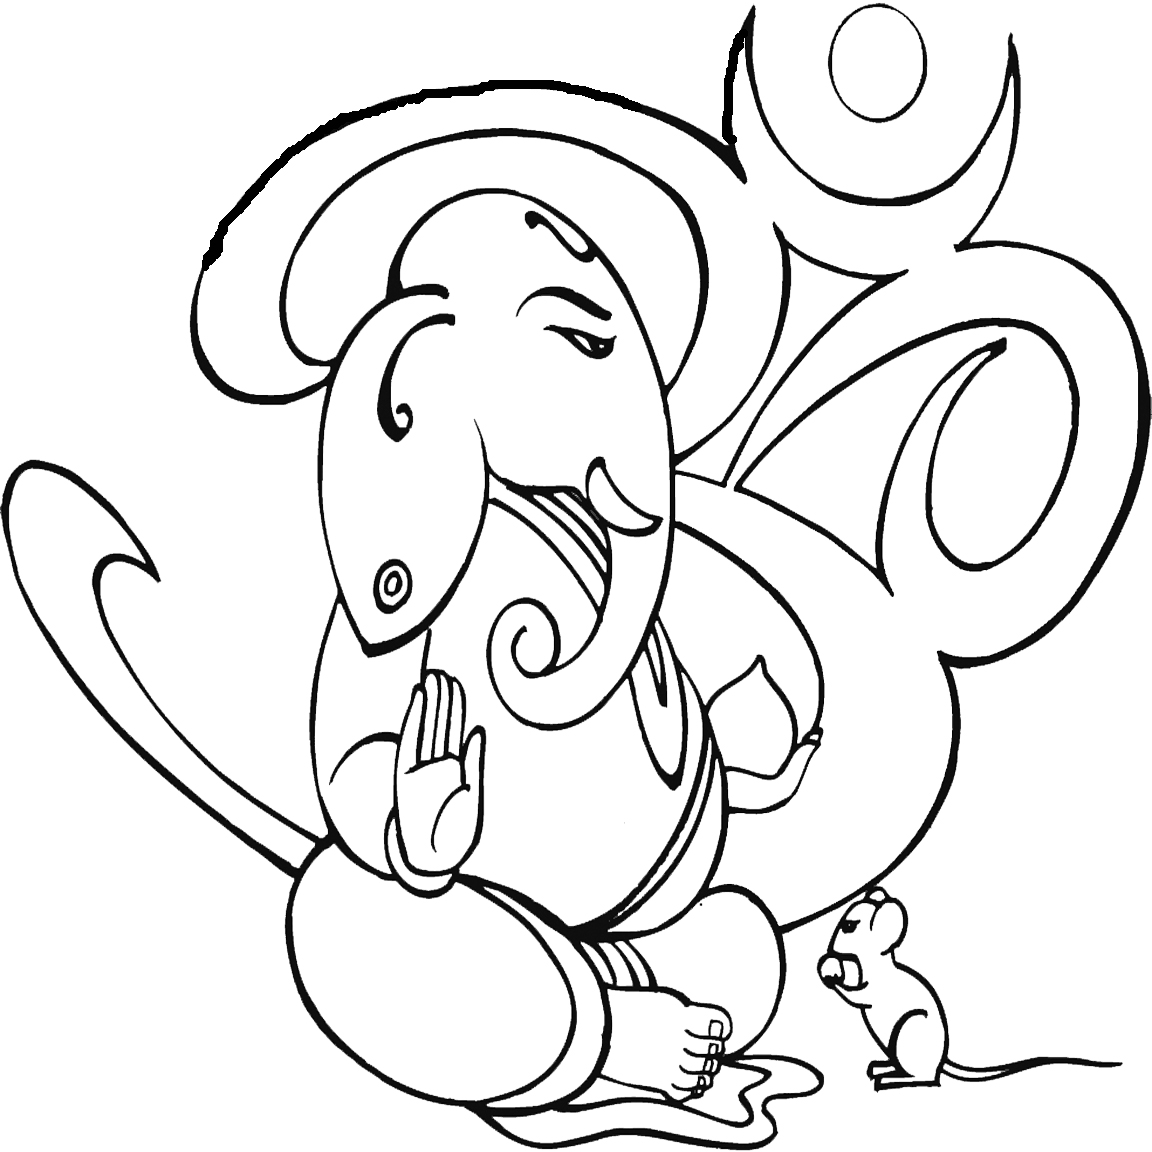 Coloring page: Hindu Mythology: Ganesh (Gods and Goddesses) #96924 - Free Printable Coloring Pages